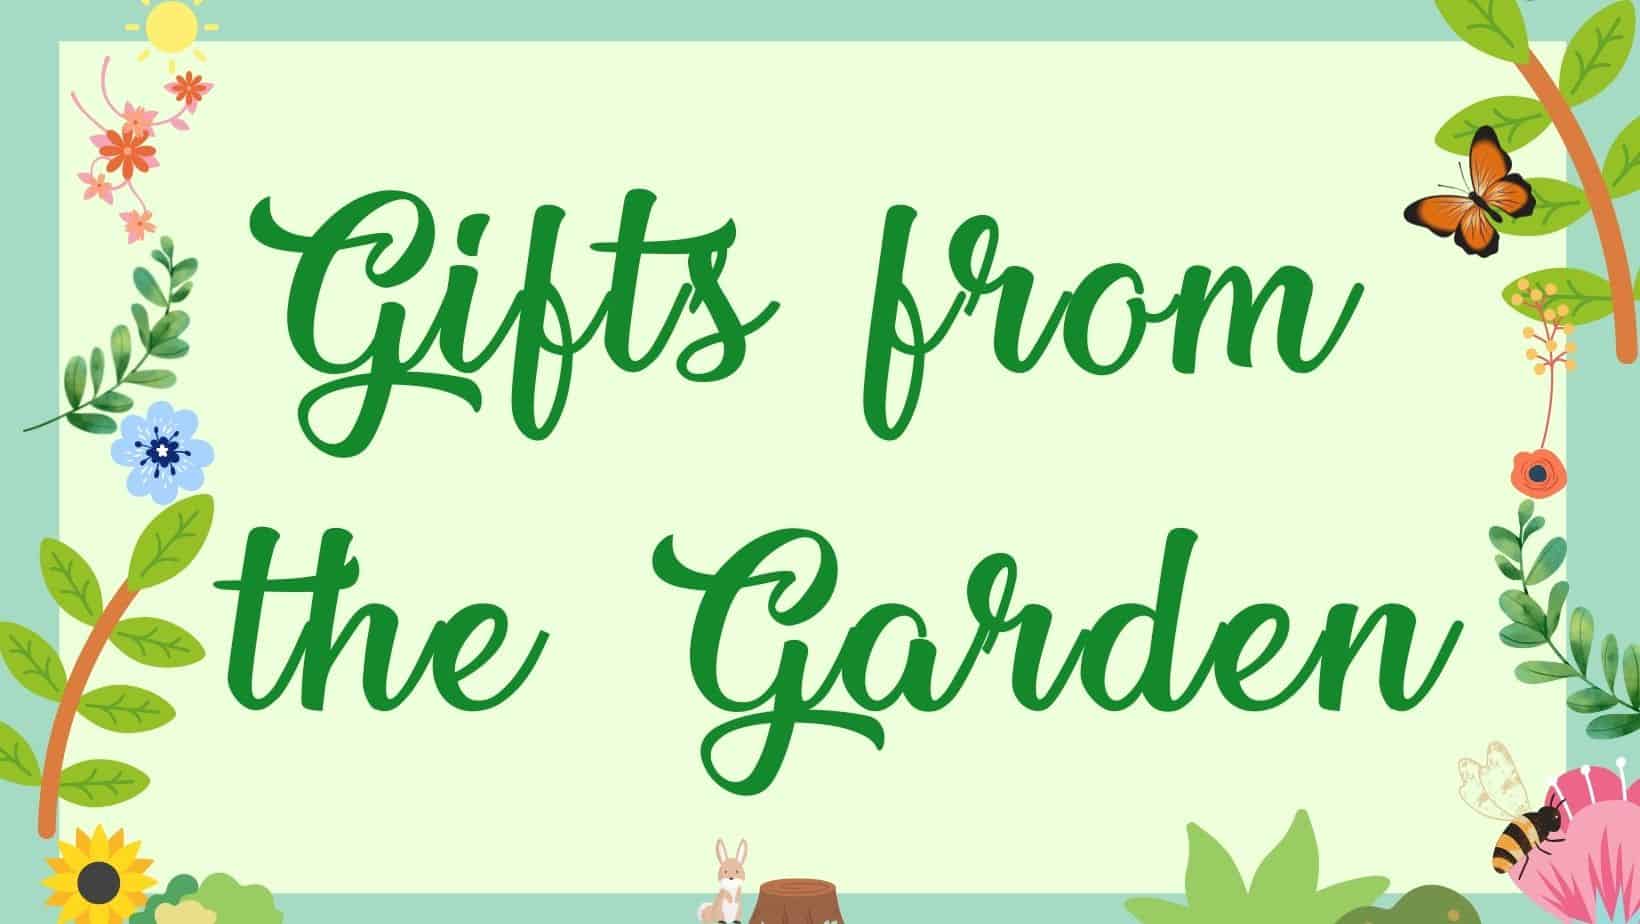 Ocoee Gifts From the Garden Facebook Cover